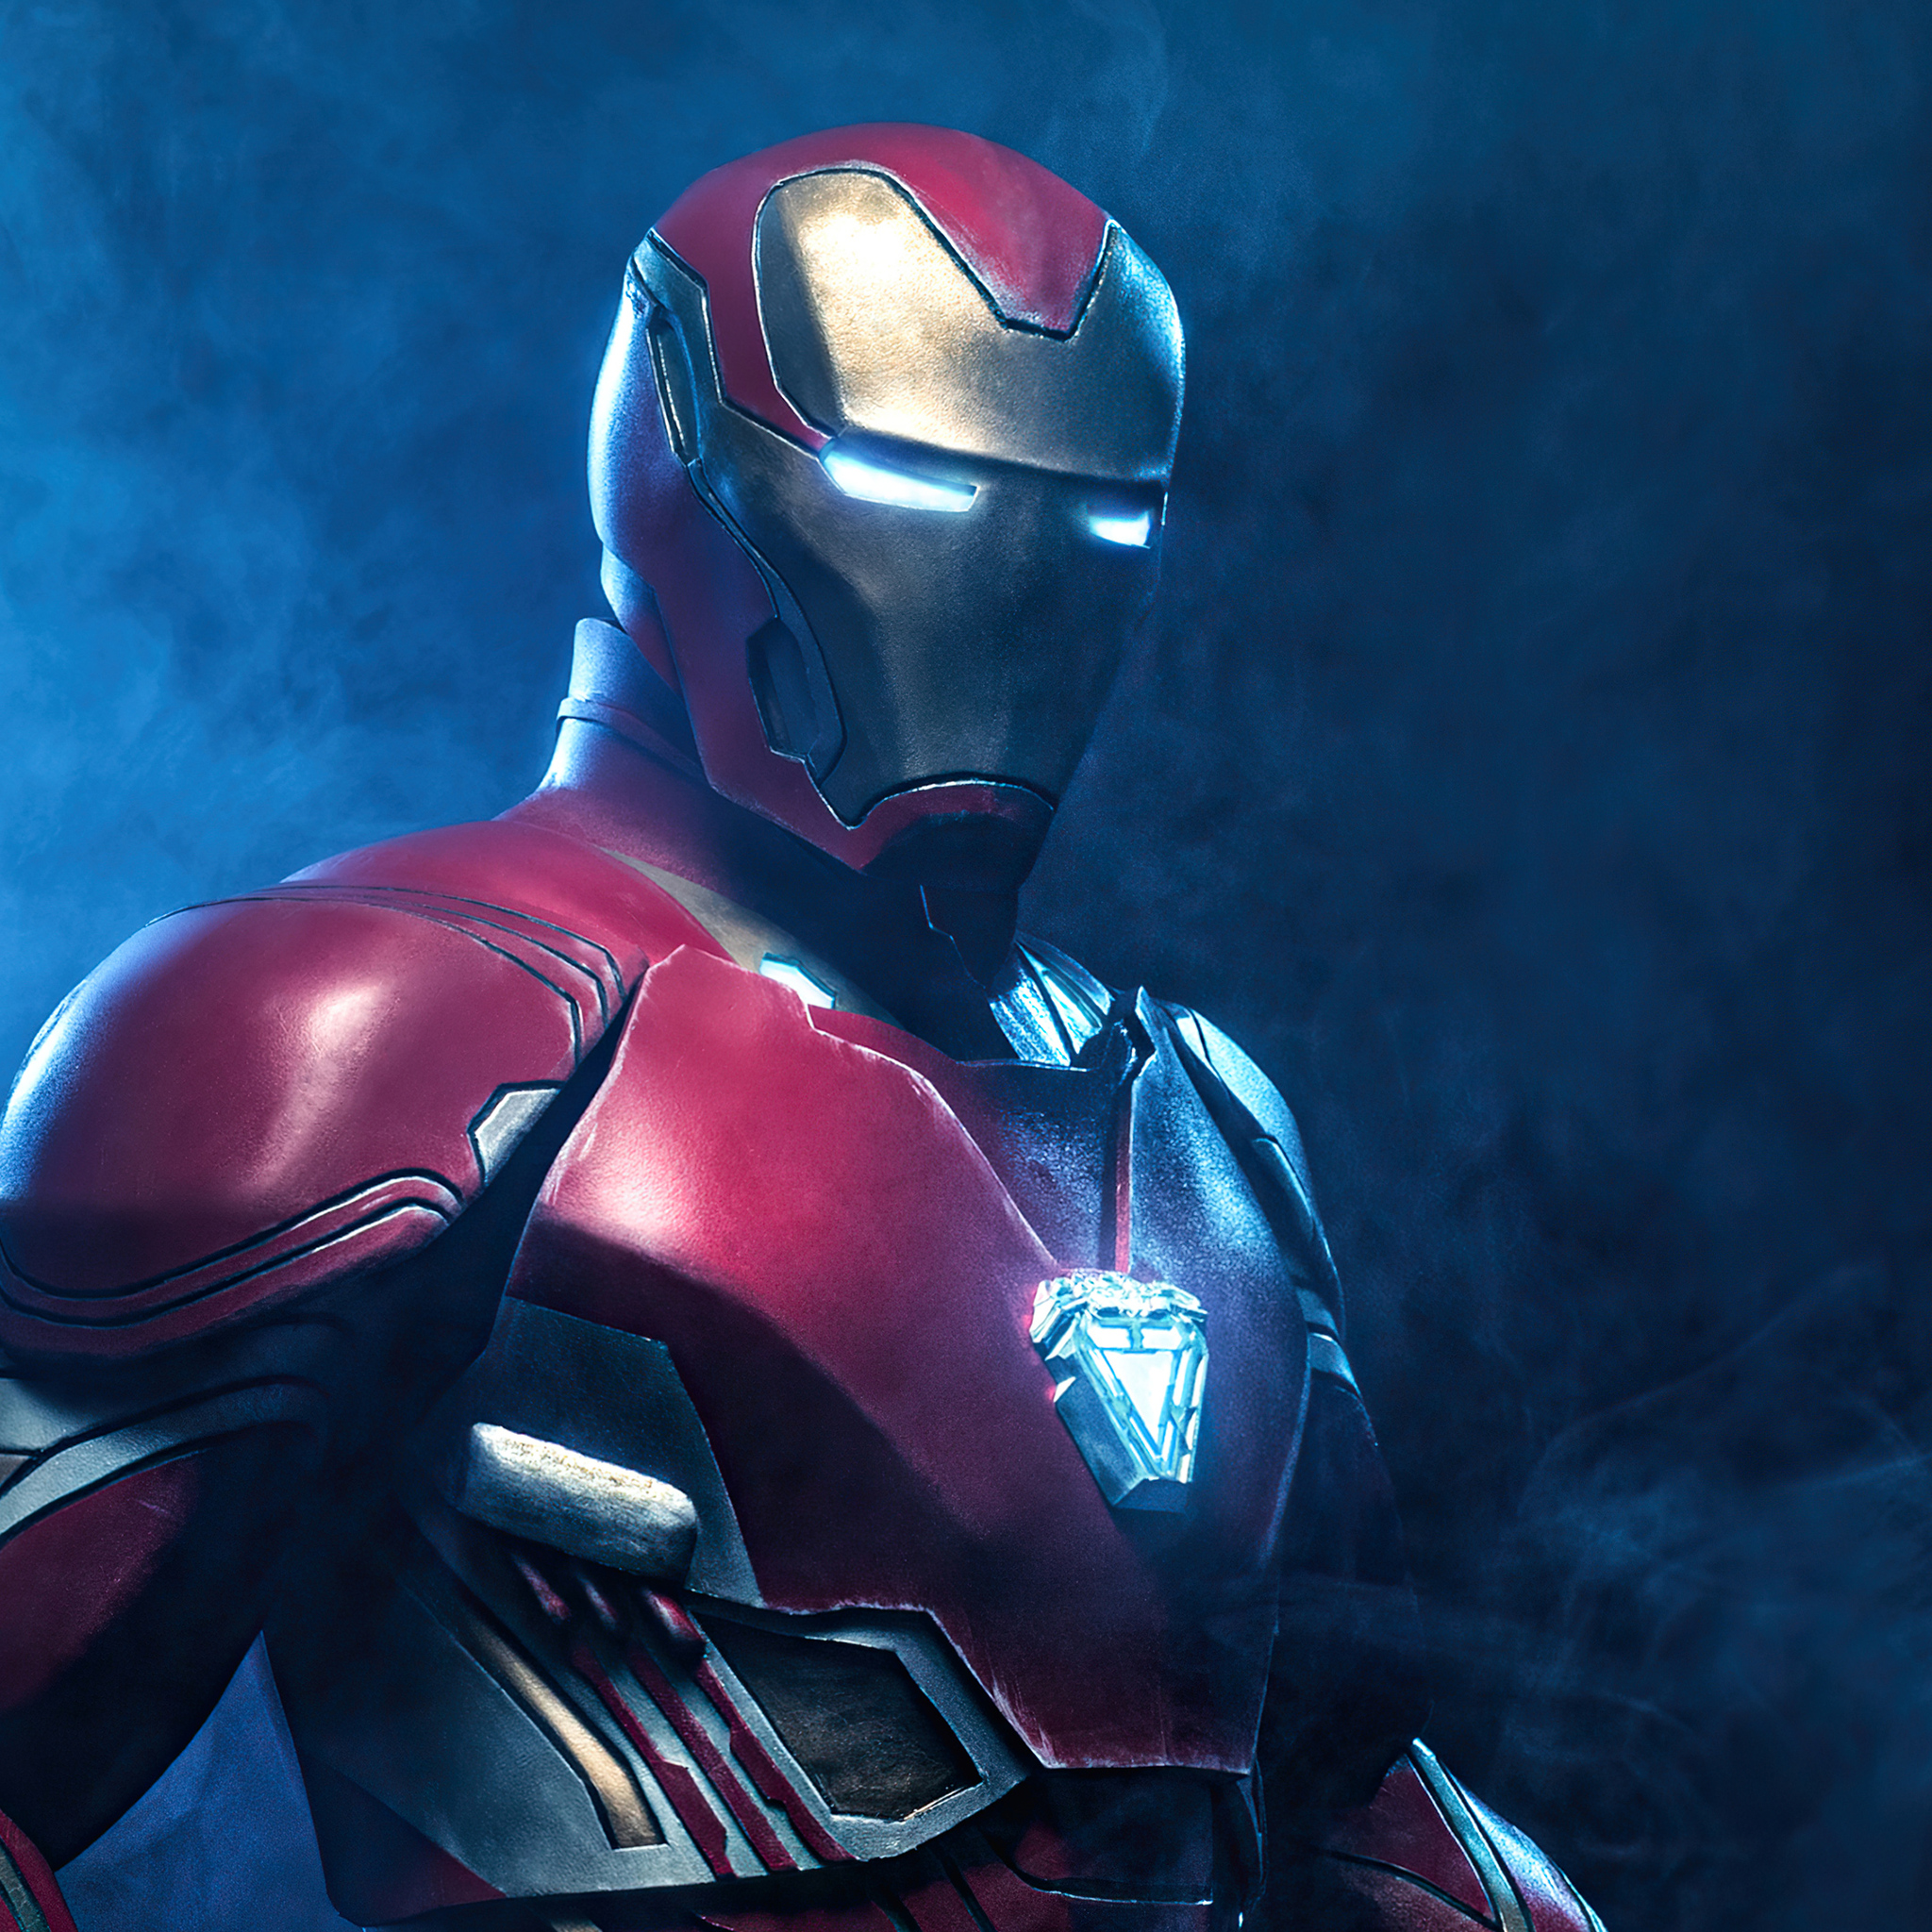 iron-man-in-suit-cosplay-9h.jpg